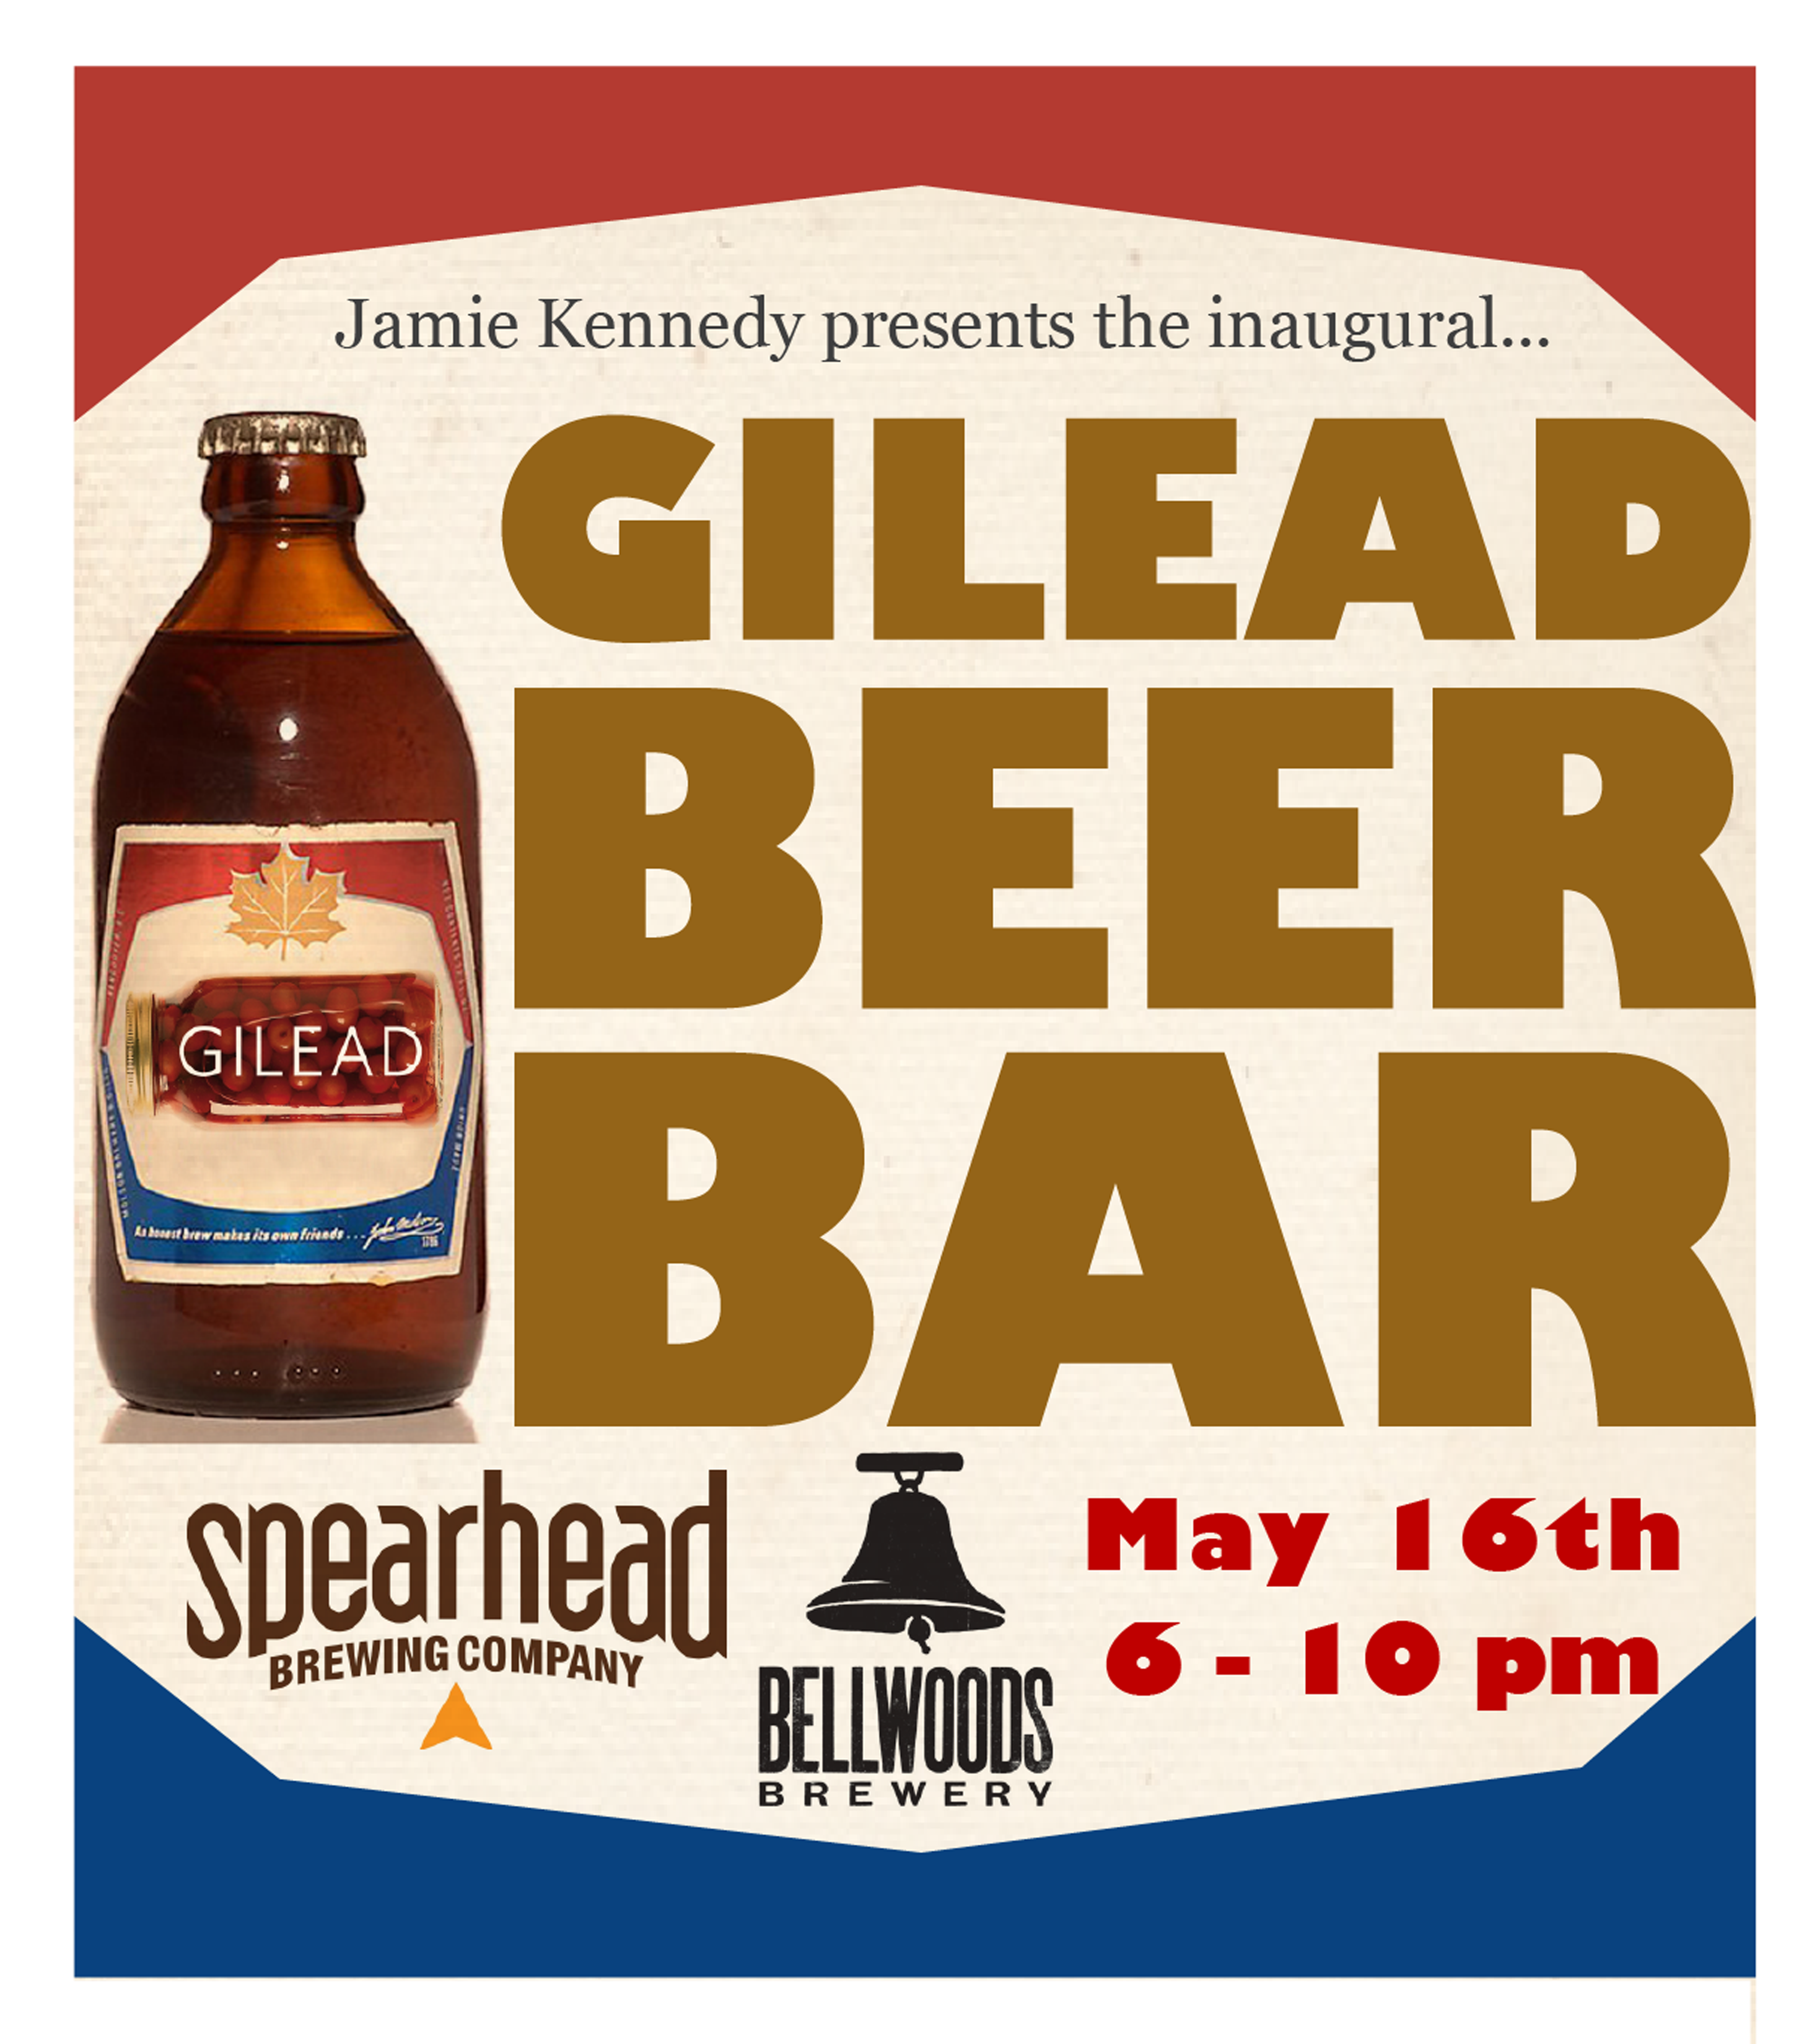 Jamie Kennedy presents – the Gilead Beer Bar, May 16